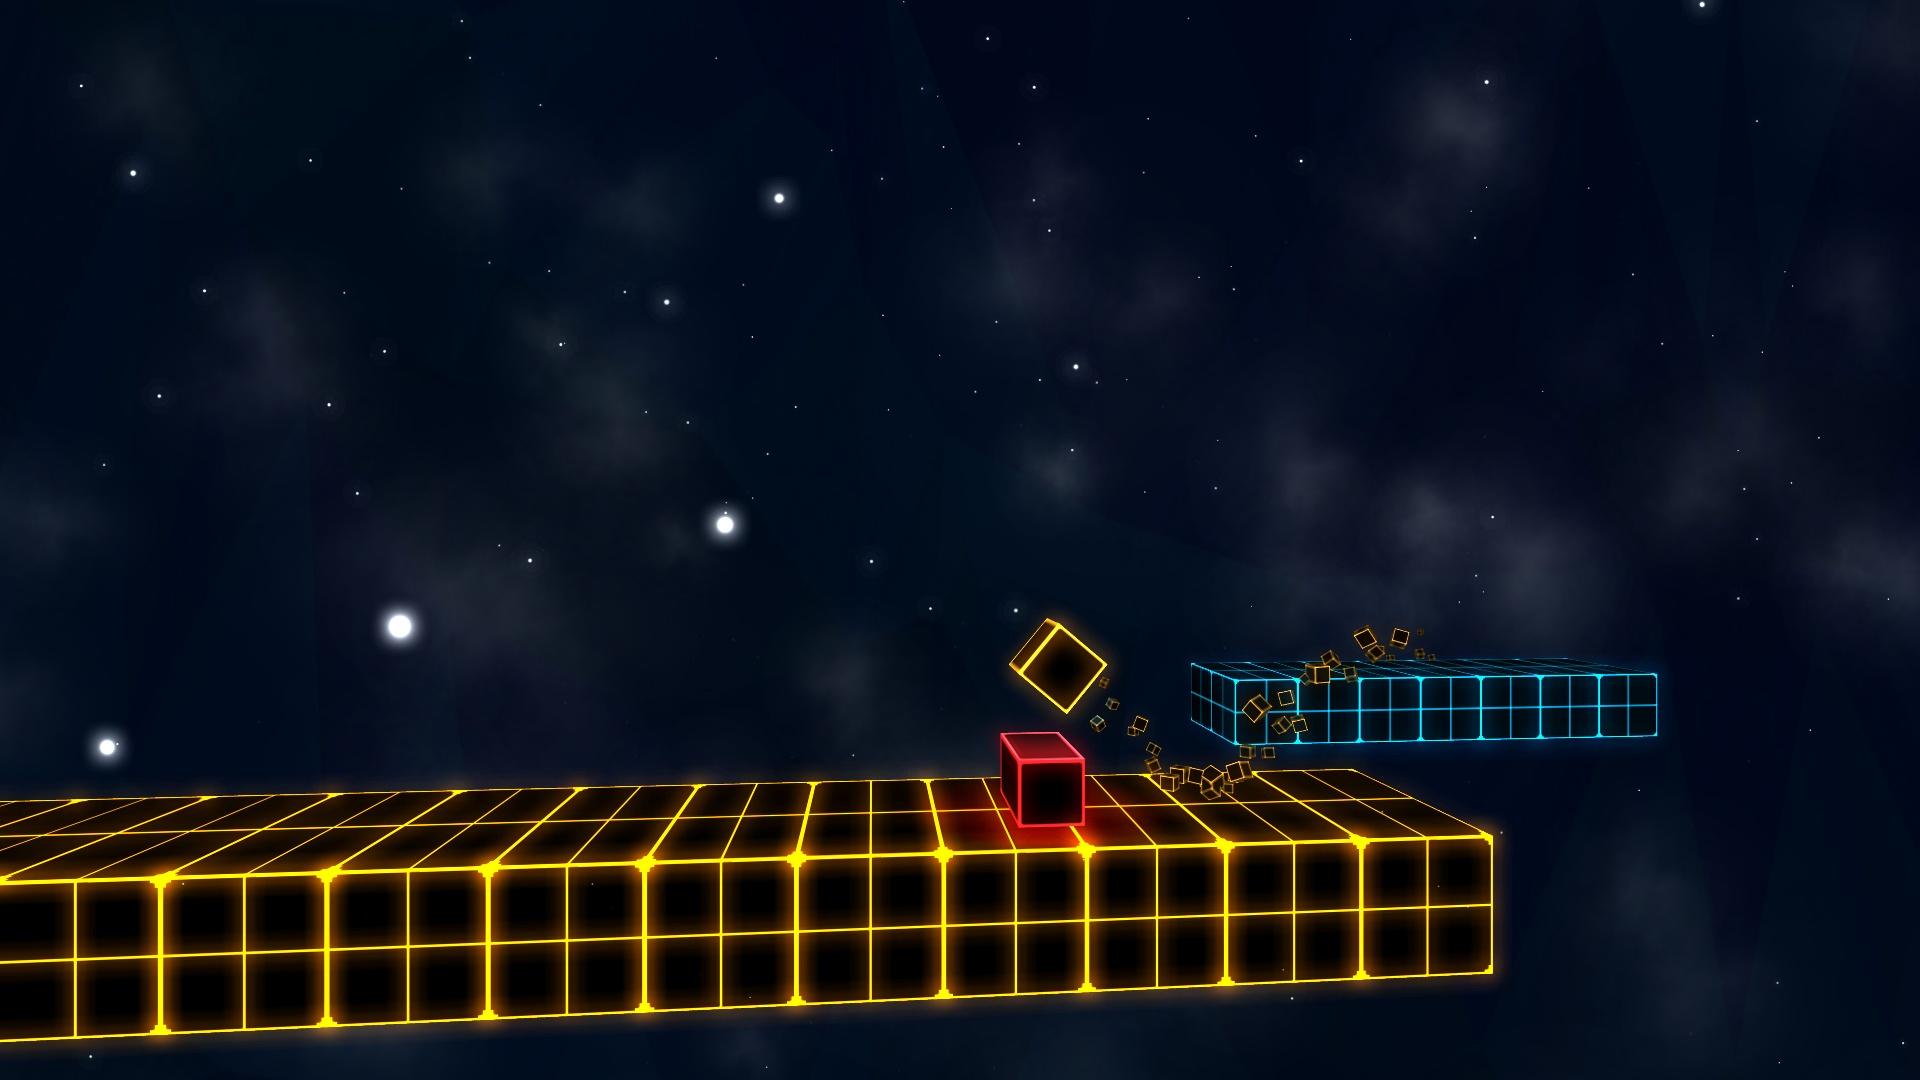 Screenshot №6 from game Cube Runner